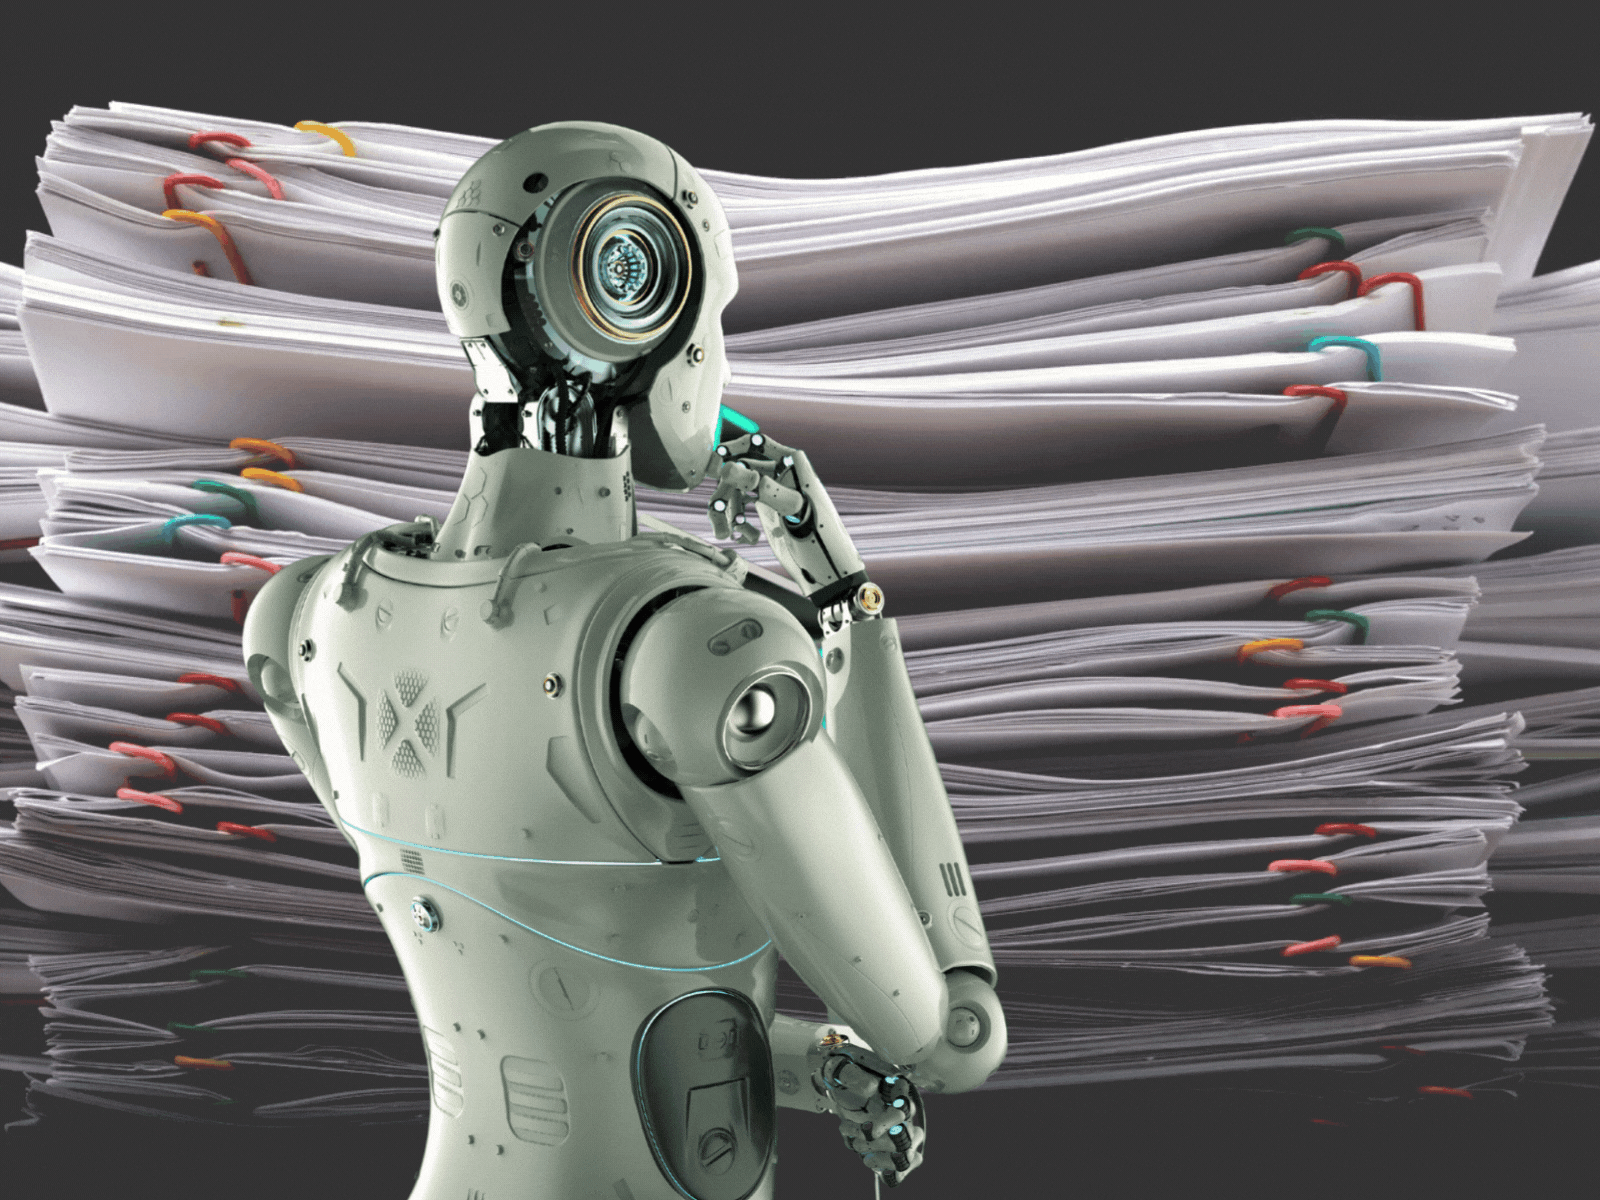 Publication: Io, robot